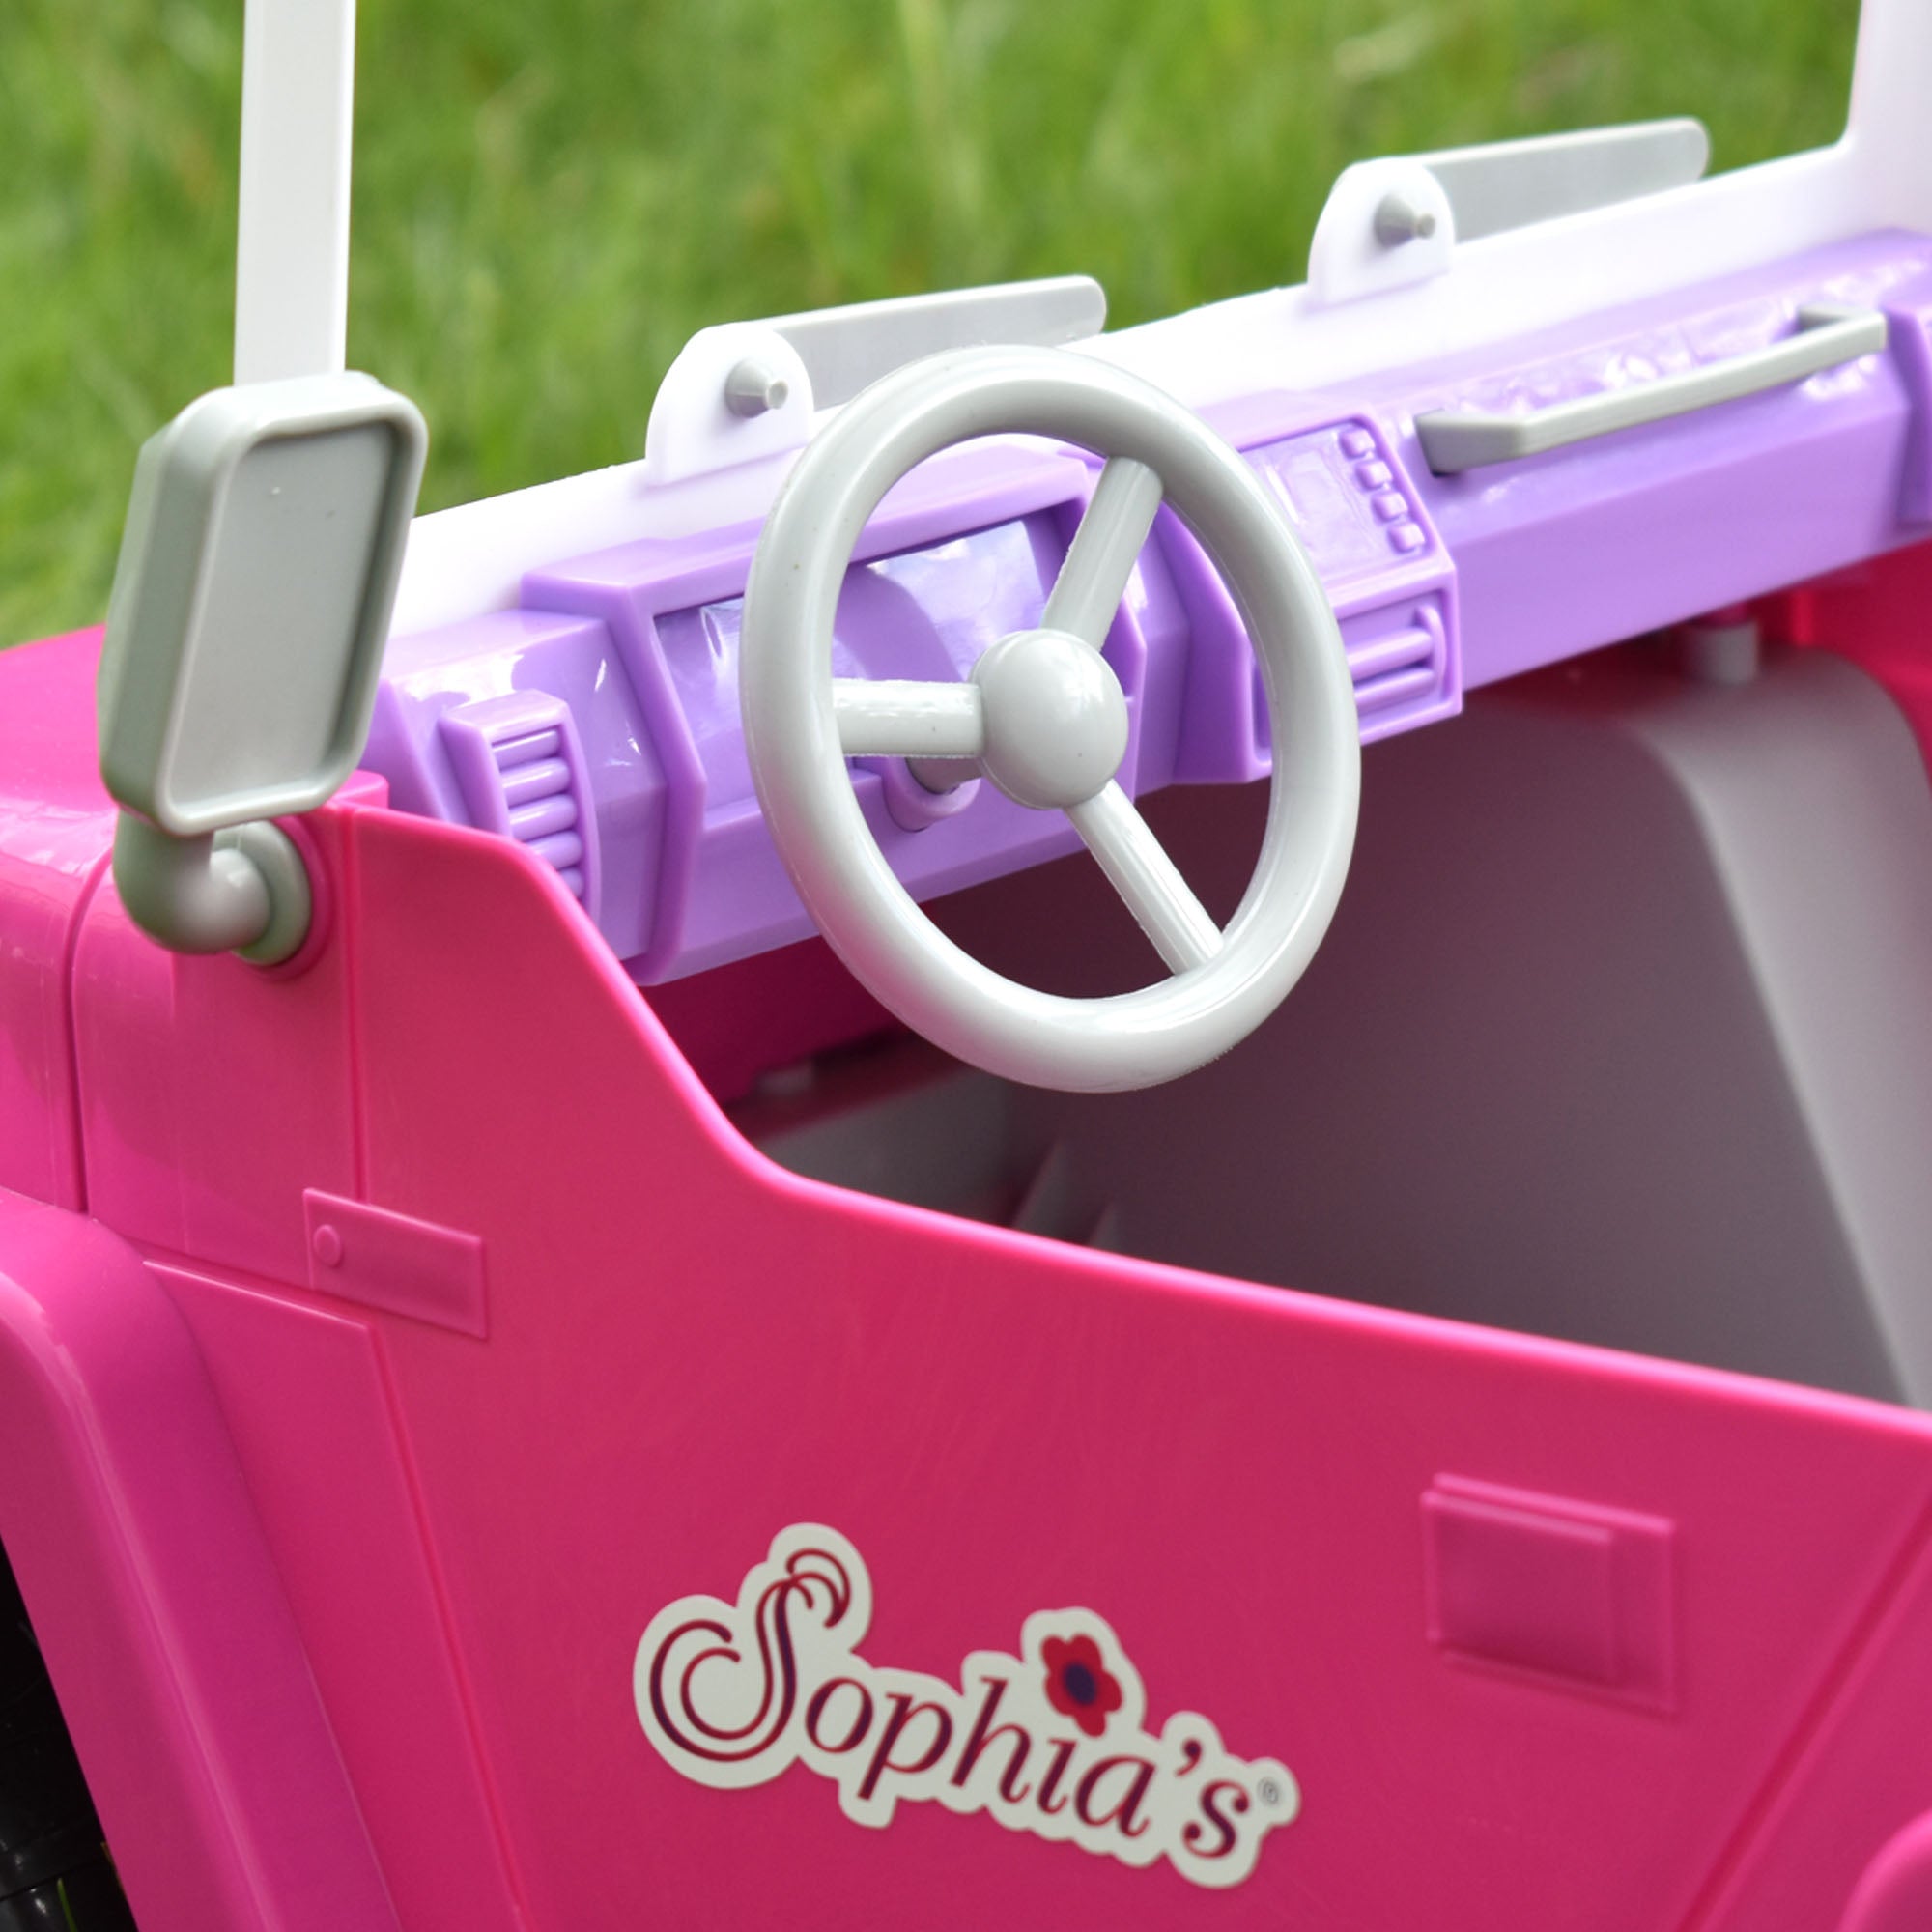 Sophia’s 4 x 4 Hot Pink Beach Cruiser Truck for 18" Dolls